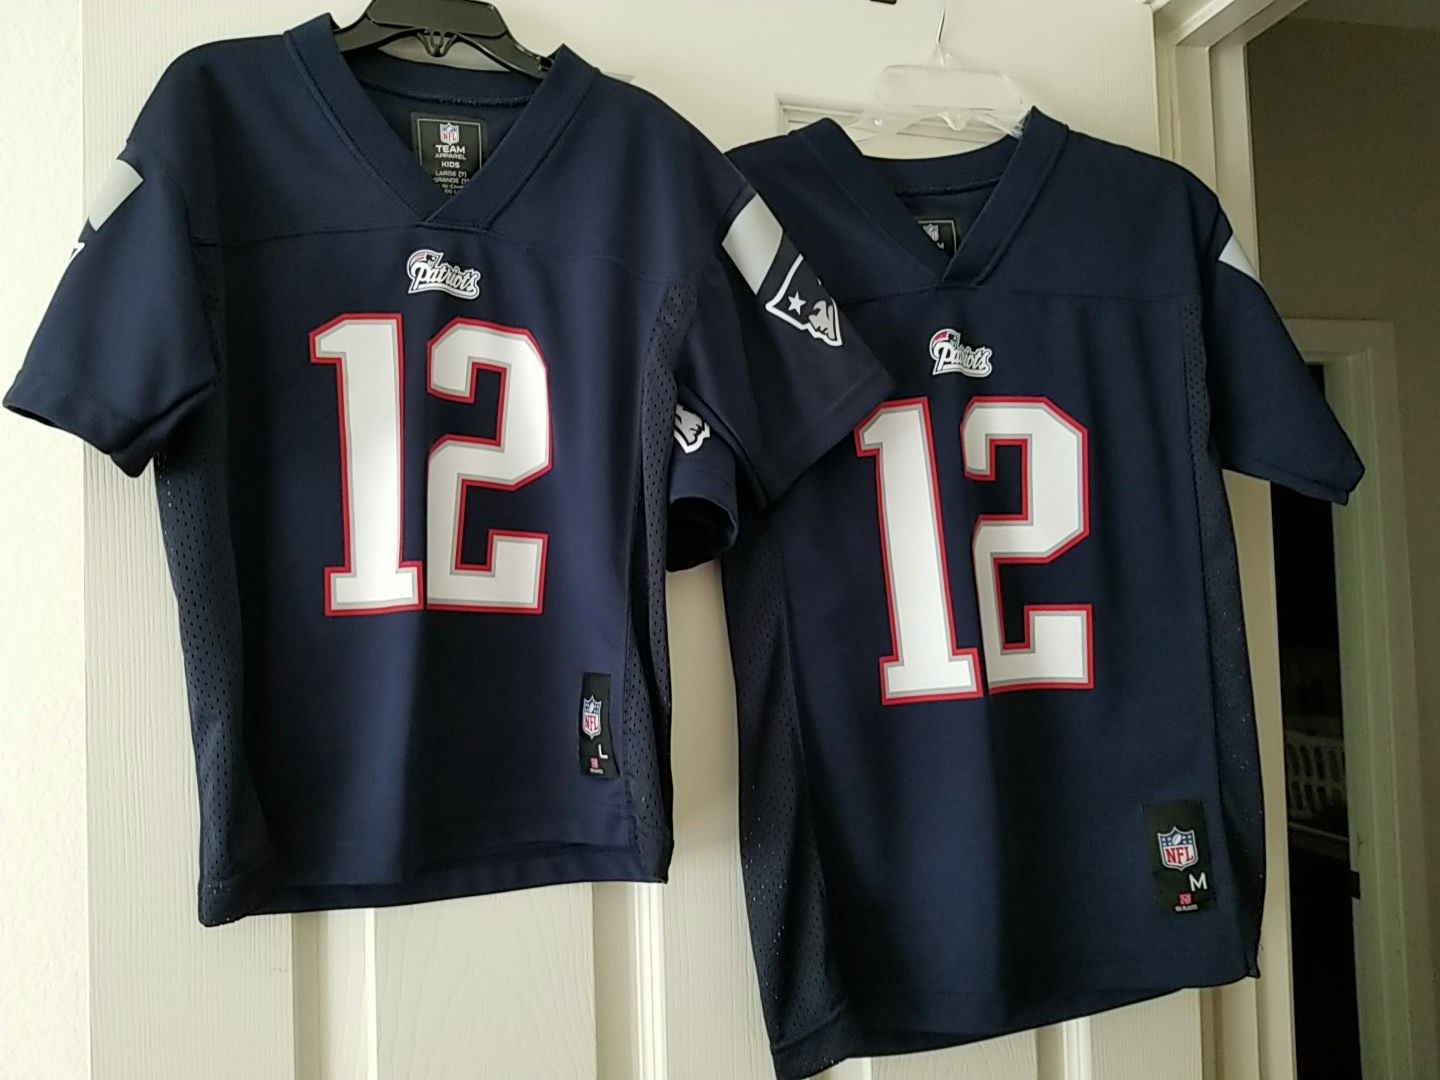 Like New Brady Patriot's jerseys